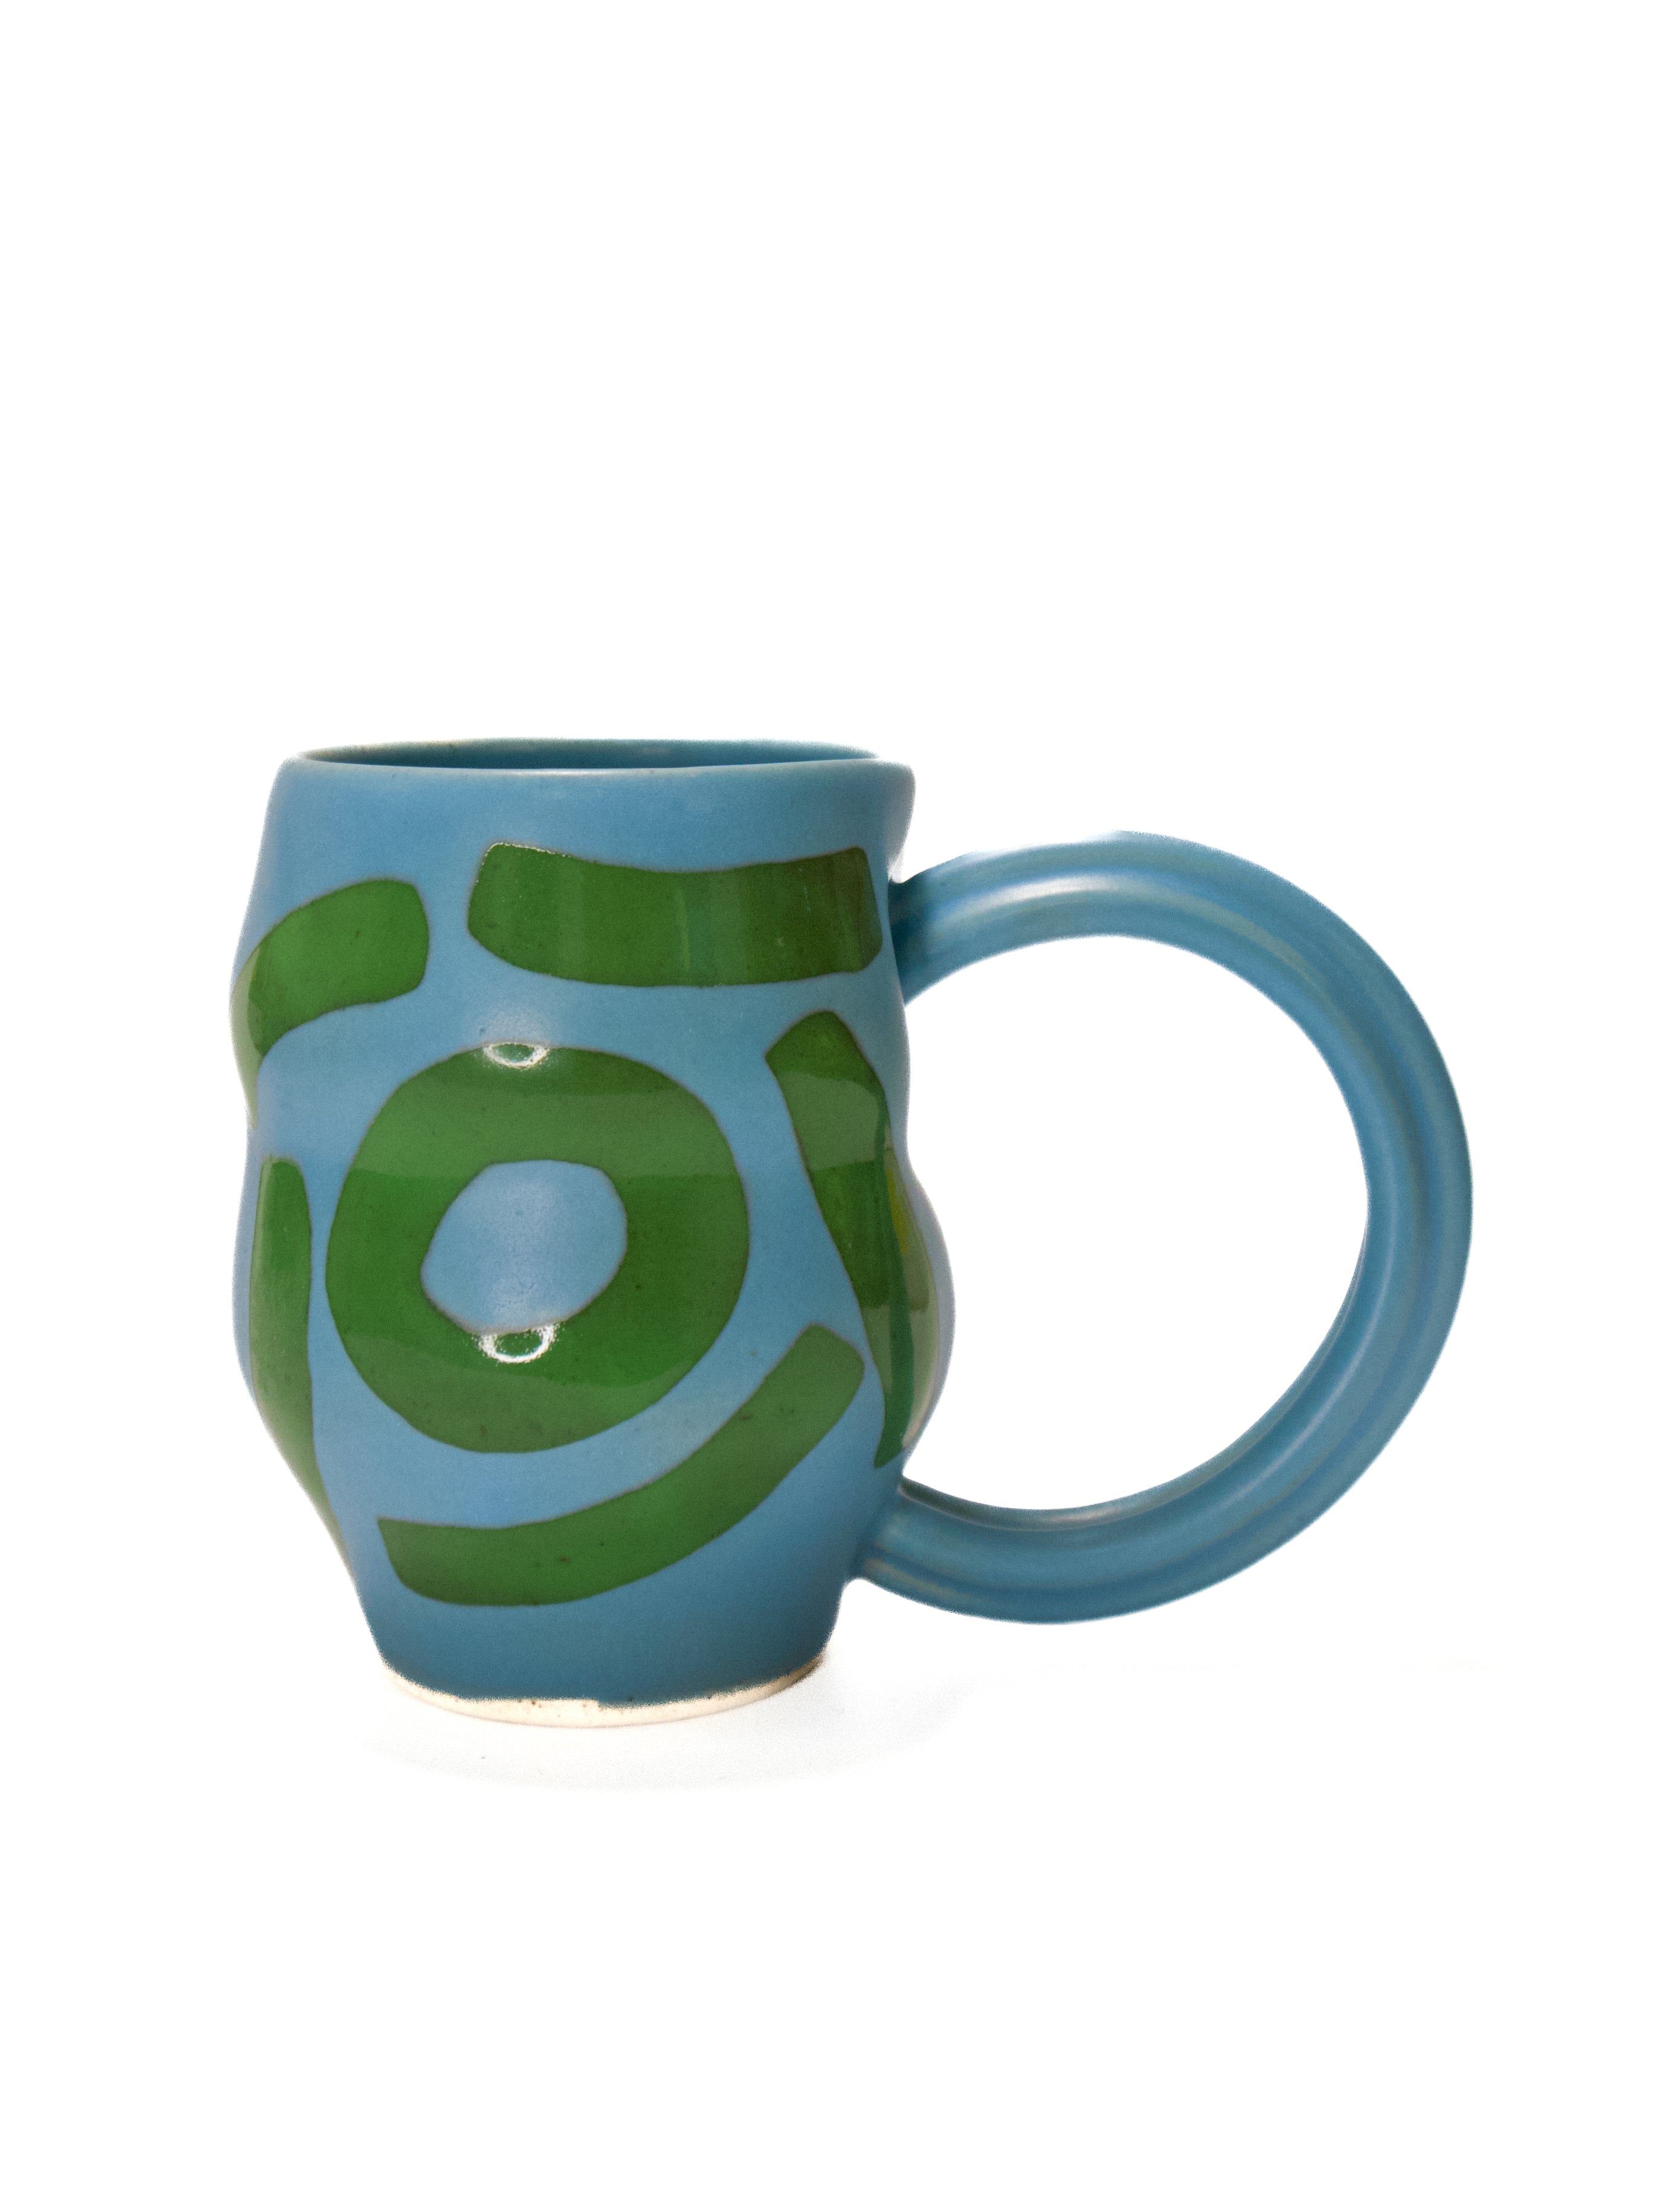 Beginner Ceramics Baby Blue Mug with Grass Green Shapes